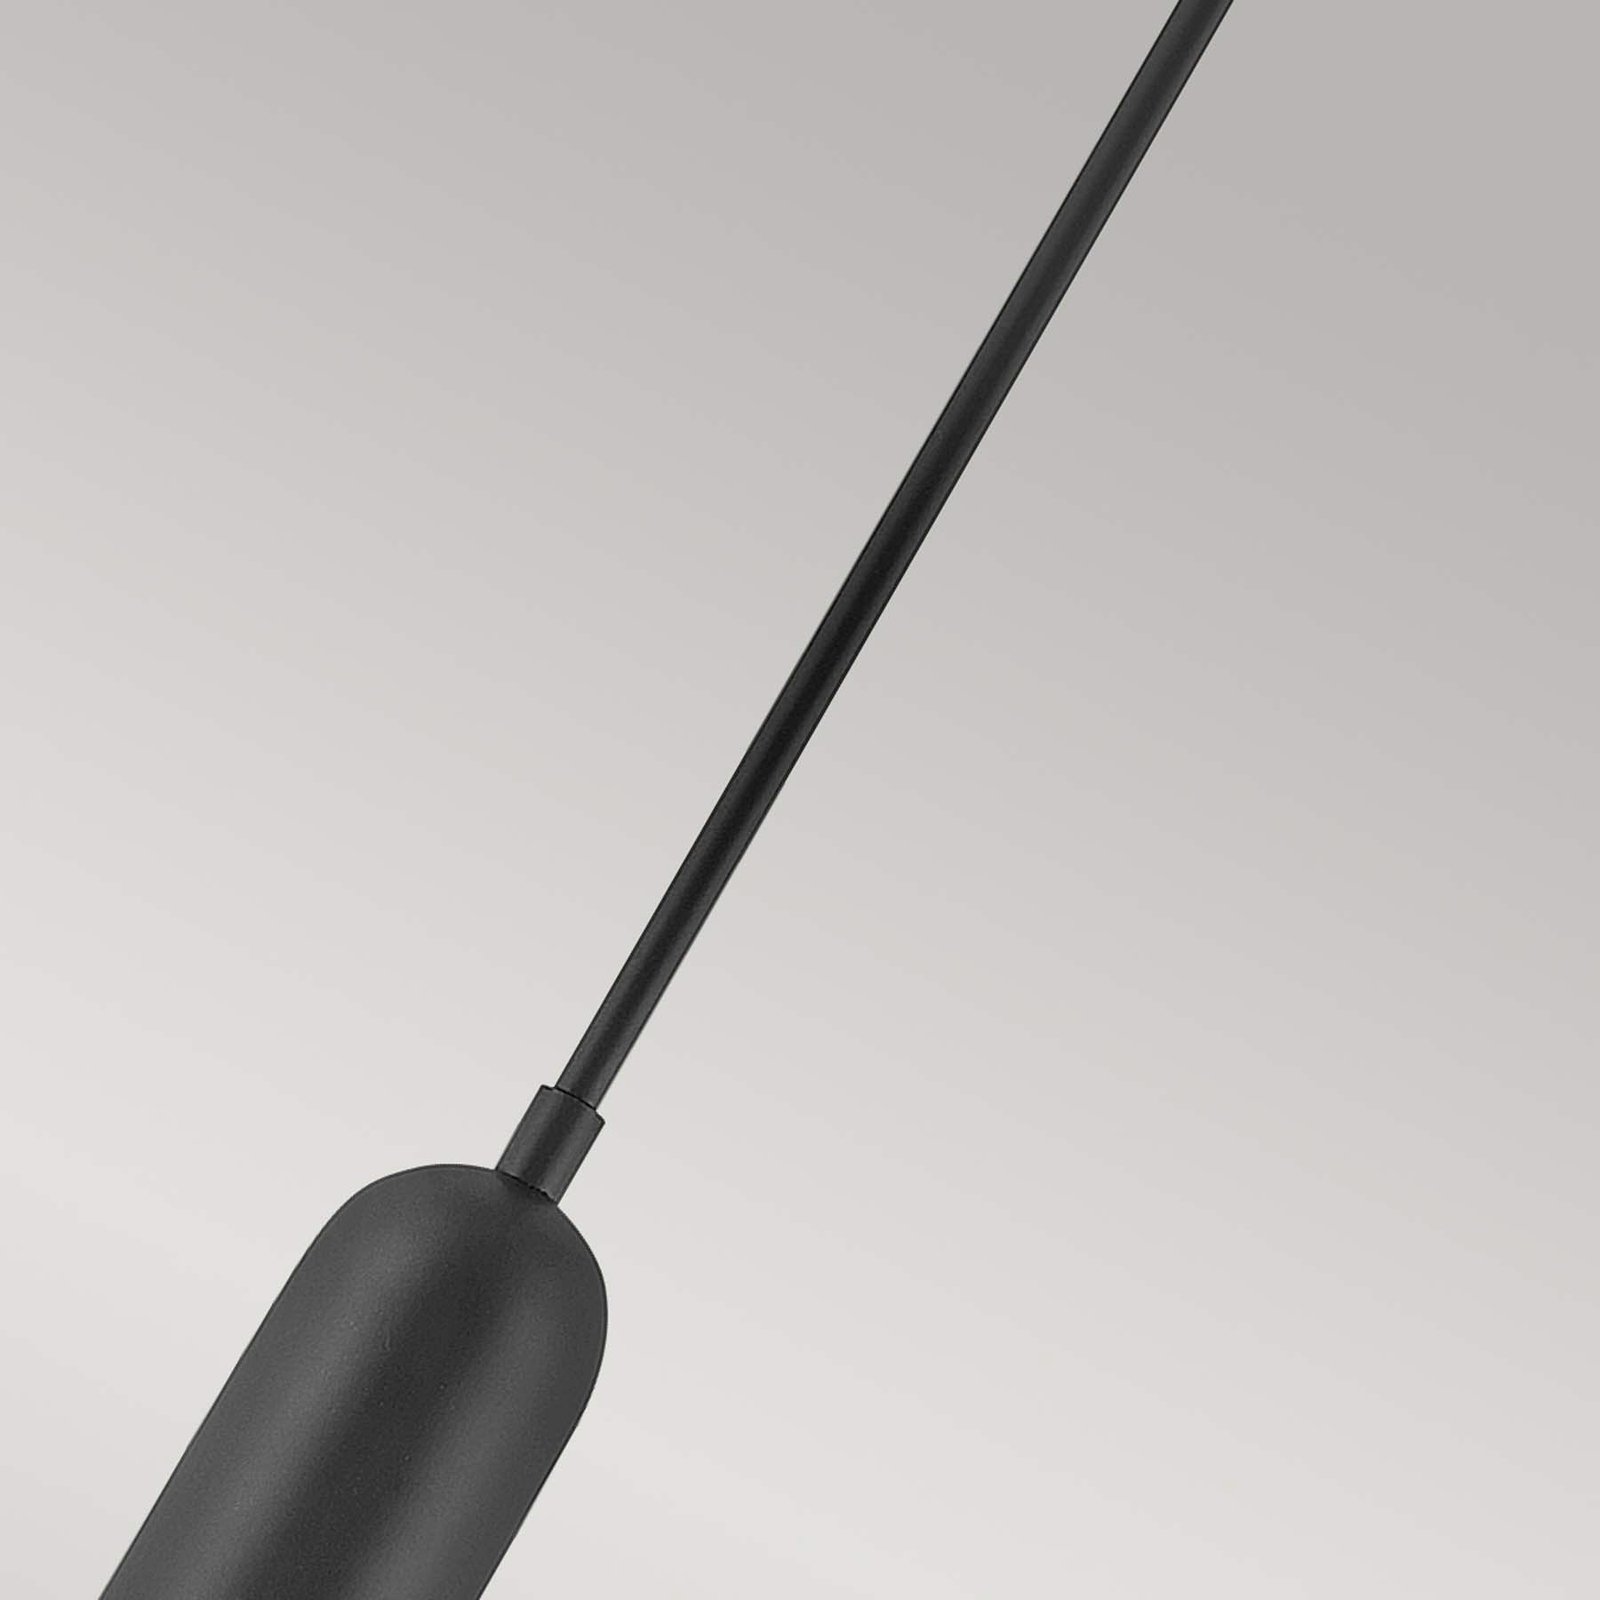 LED hanglamp Dax Mini, zwart